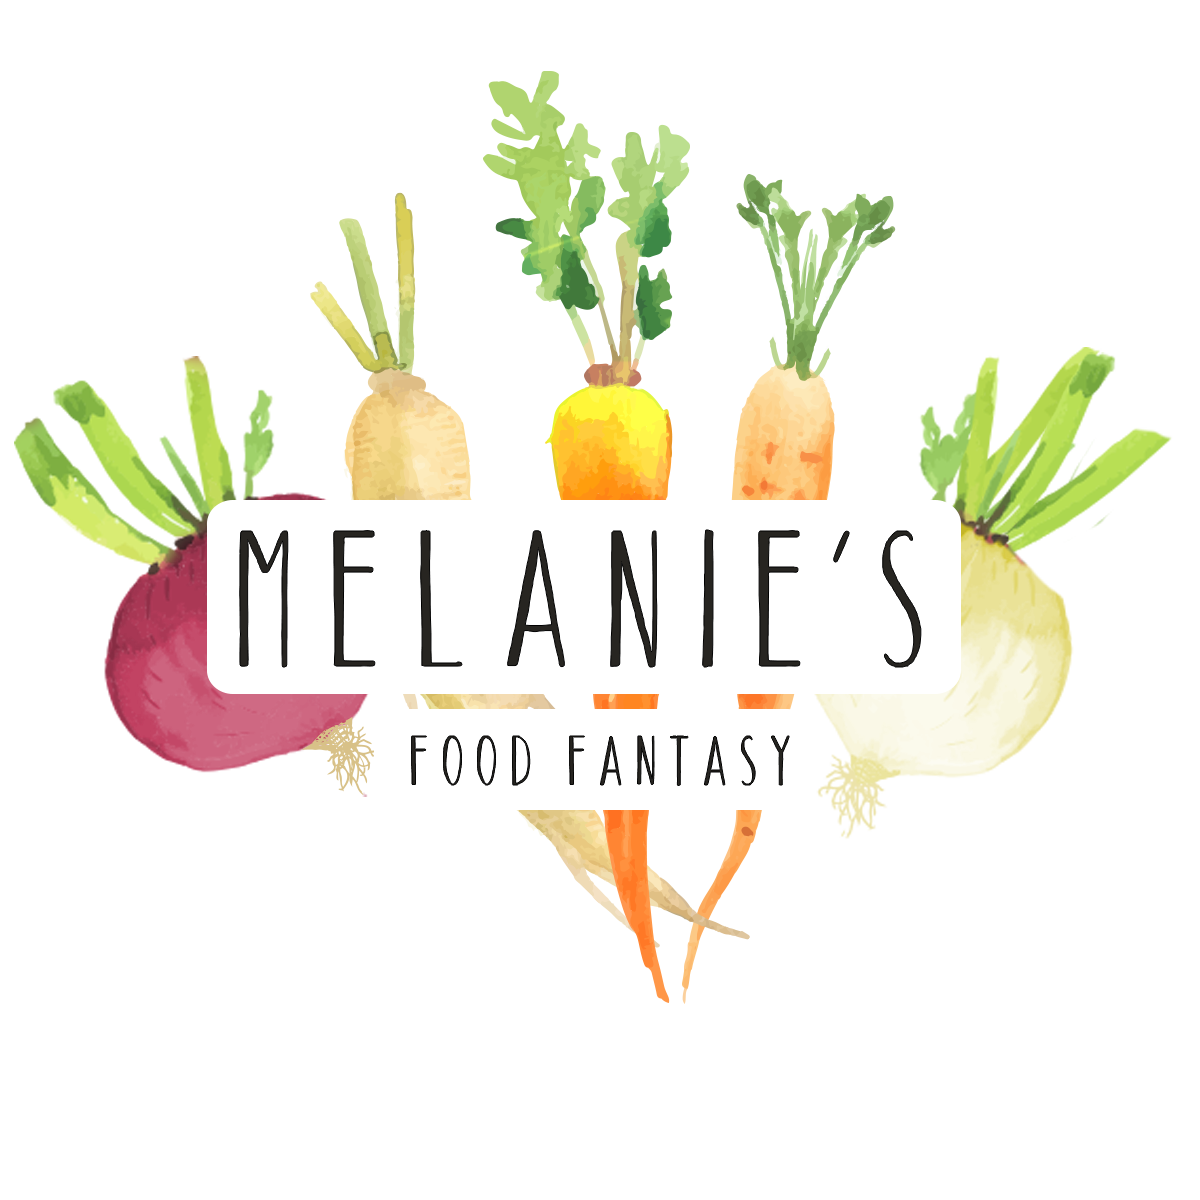 Melanie's Food Fantasy